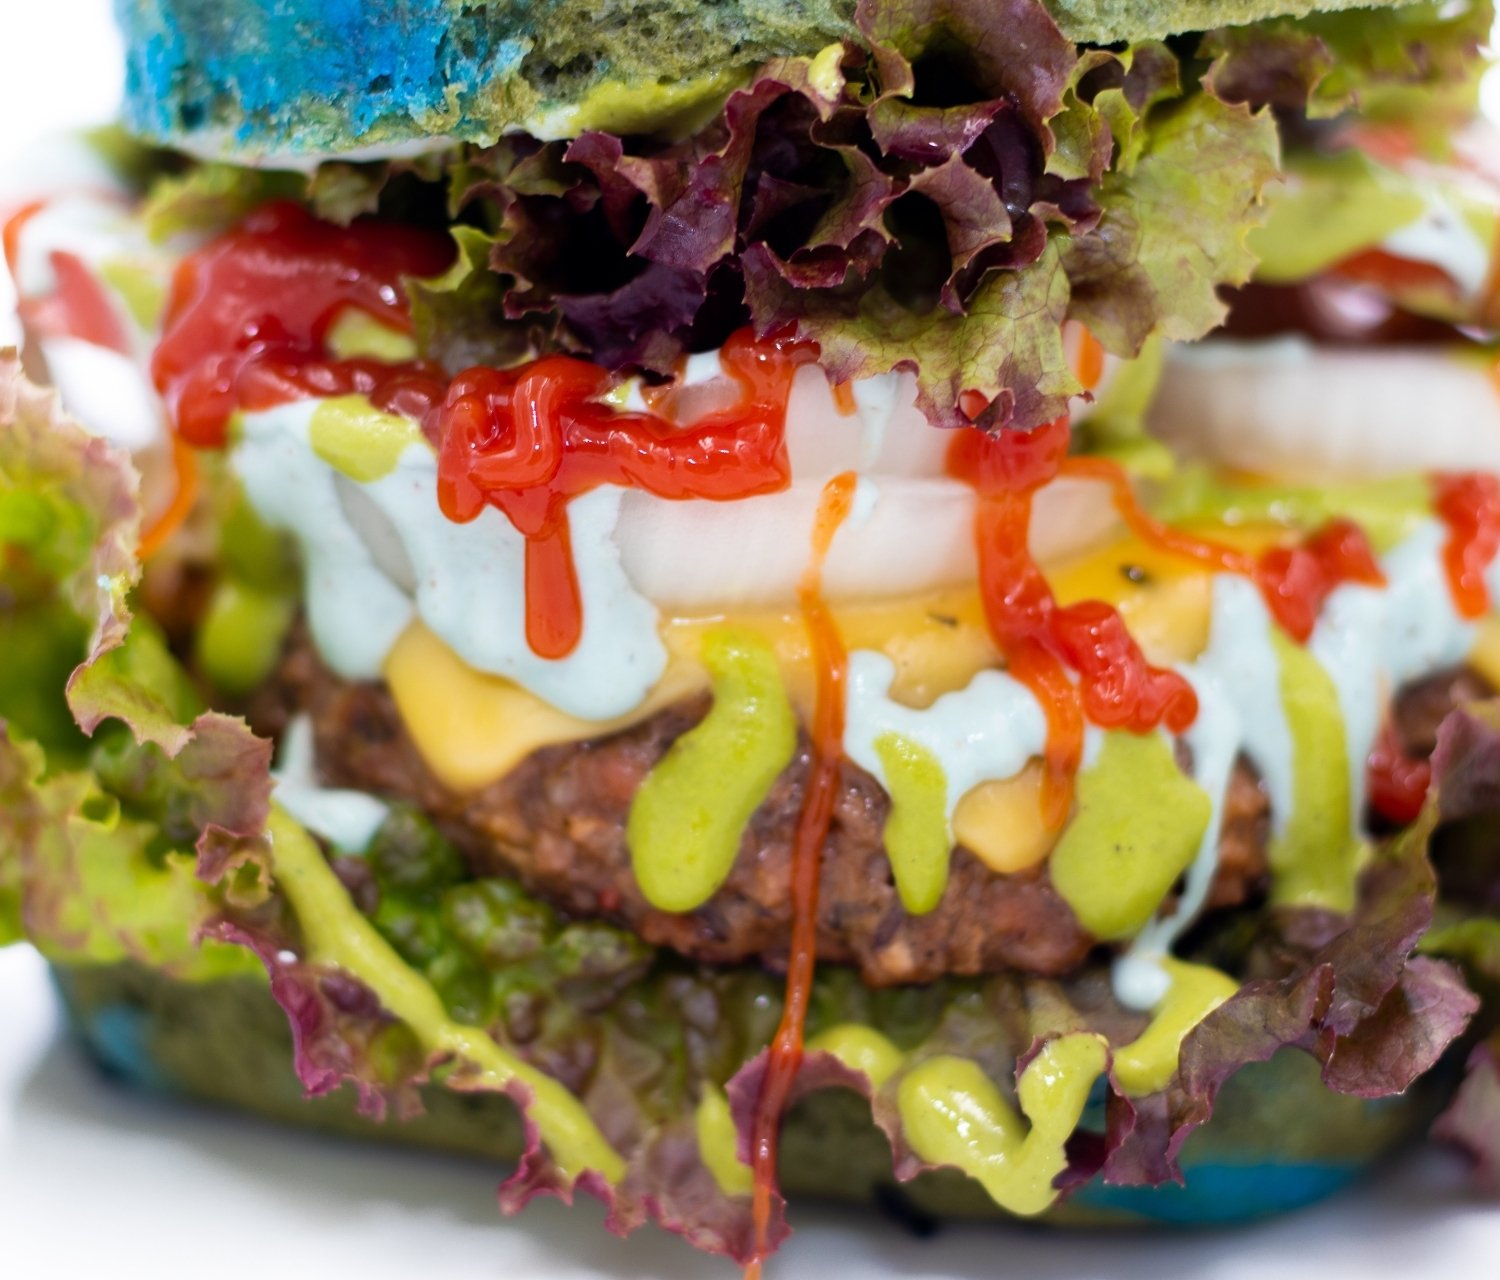 Mushrooms-are-saving-the-world-plant-based-vegan-burgers-Assuaged 2